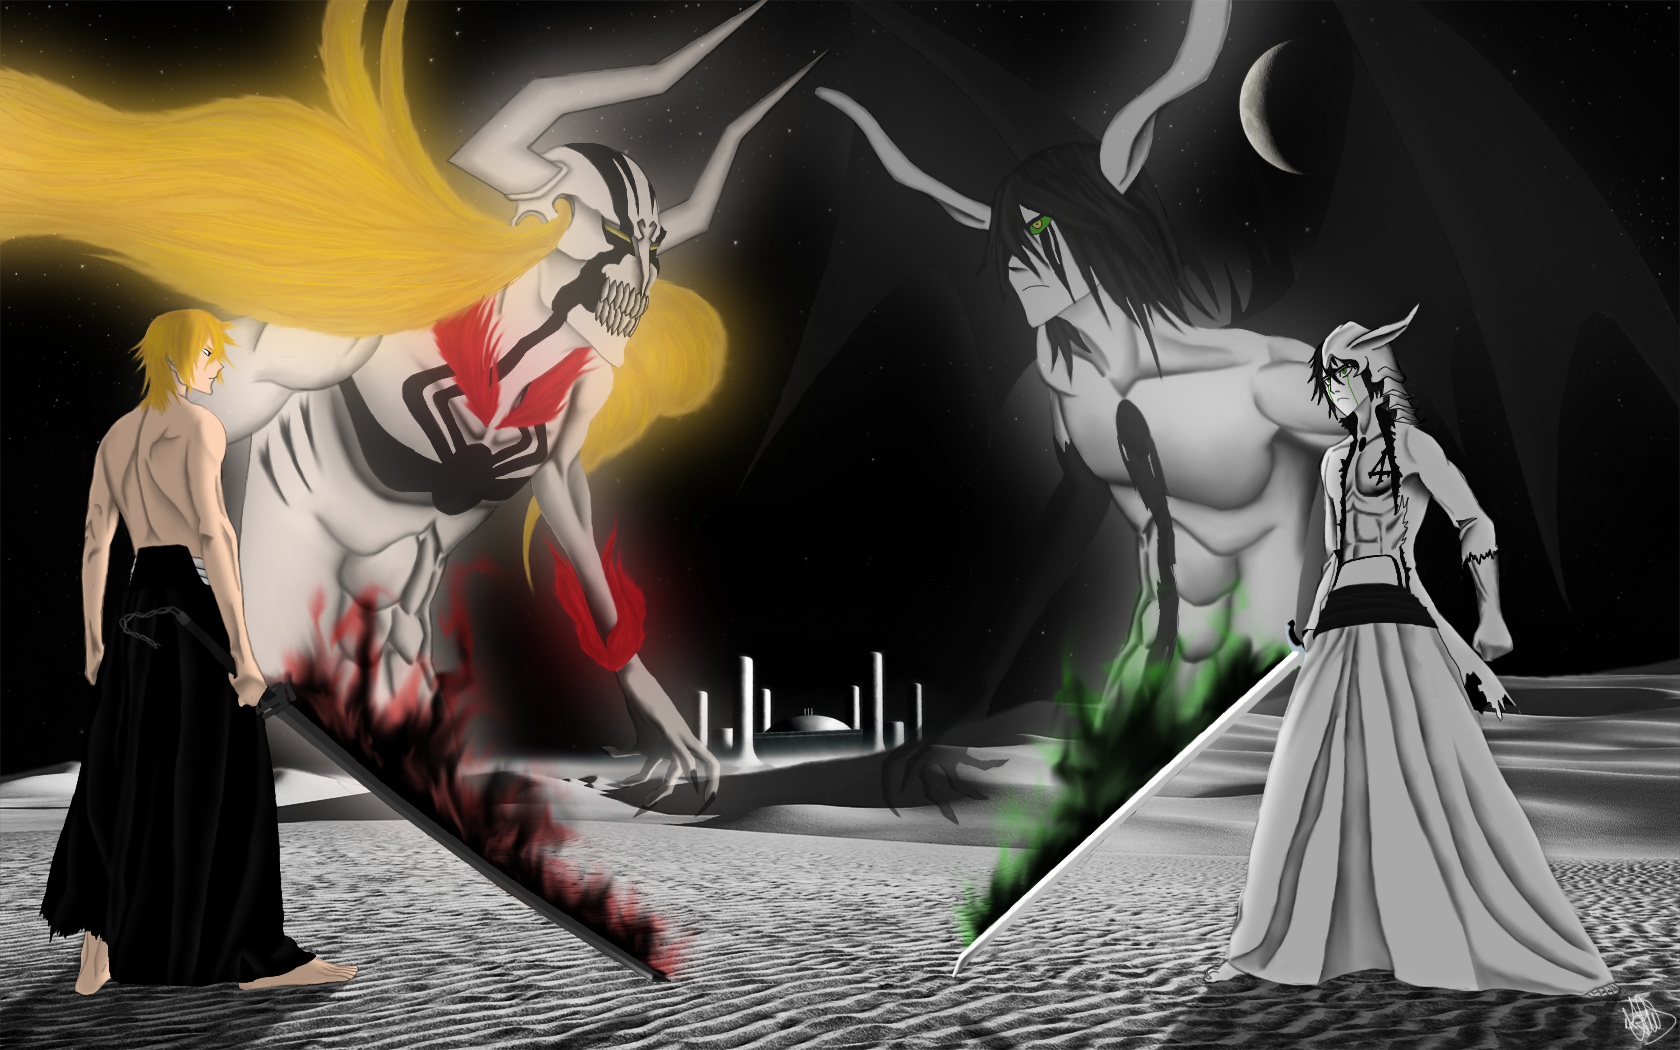 Kaidou vs Vasto Lorde Ichigo and Ulquiorra - Battles - Comic Vine